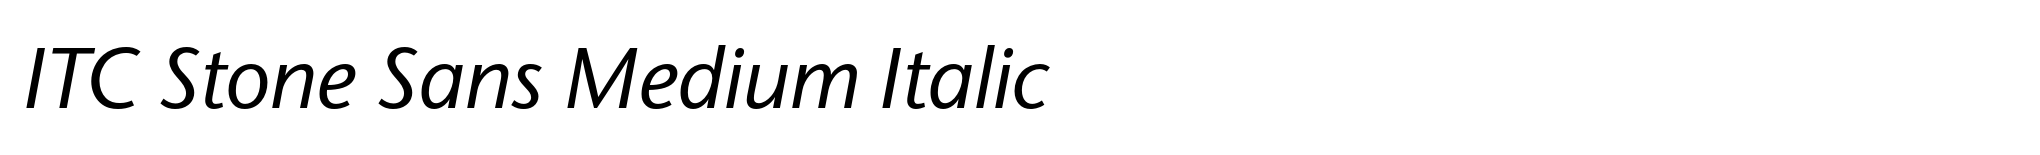 ITC Stone Sans Medium Italic image